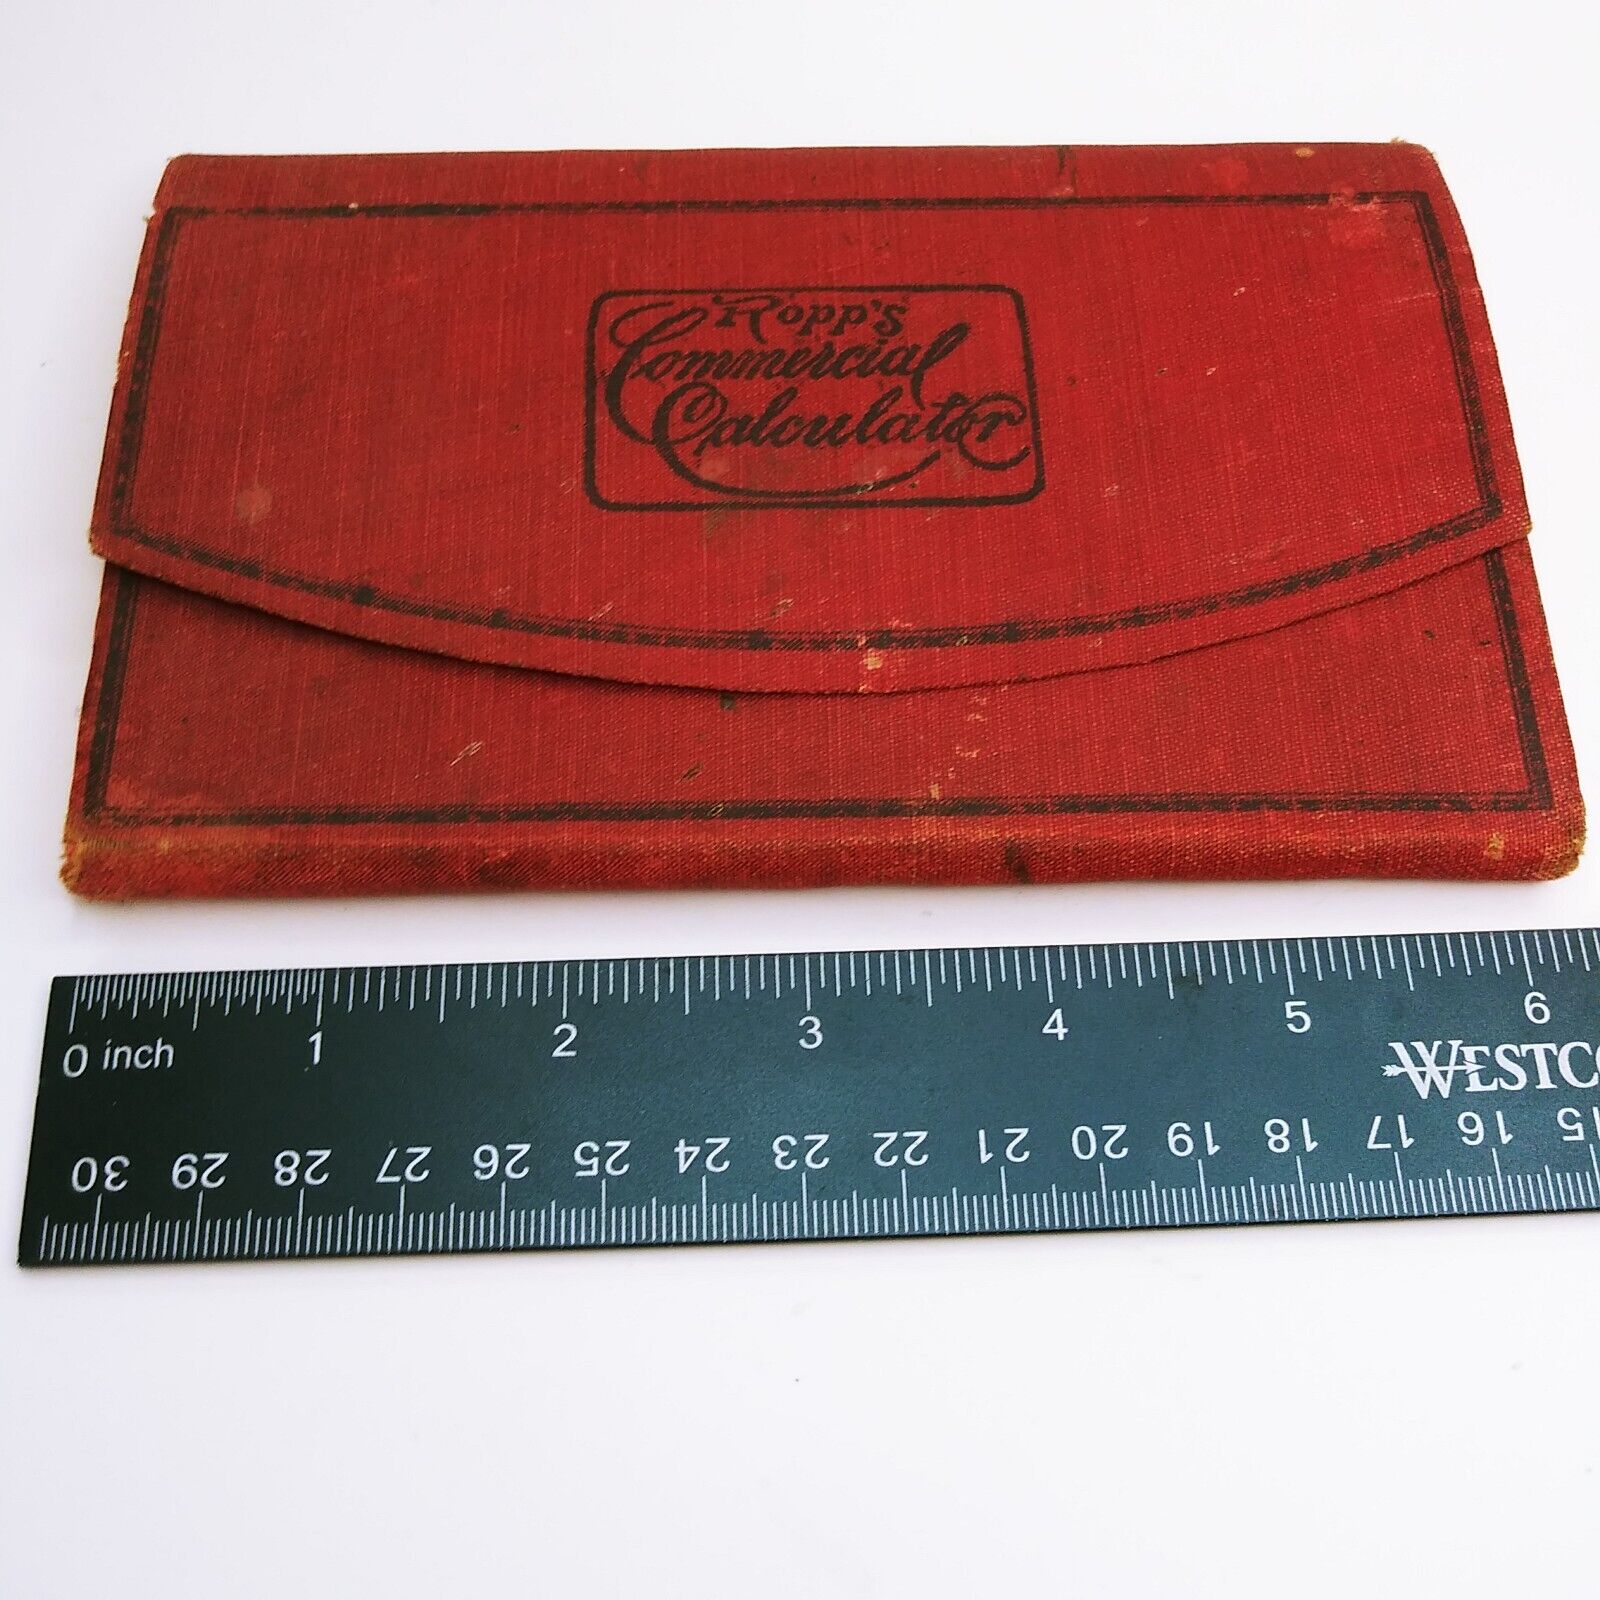 Antique 1906 Ropp\'s New Commercial Calculator & Short Cut Arithmetic BOOK - READ